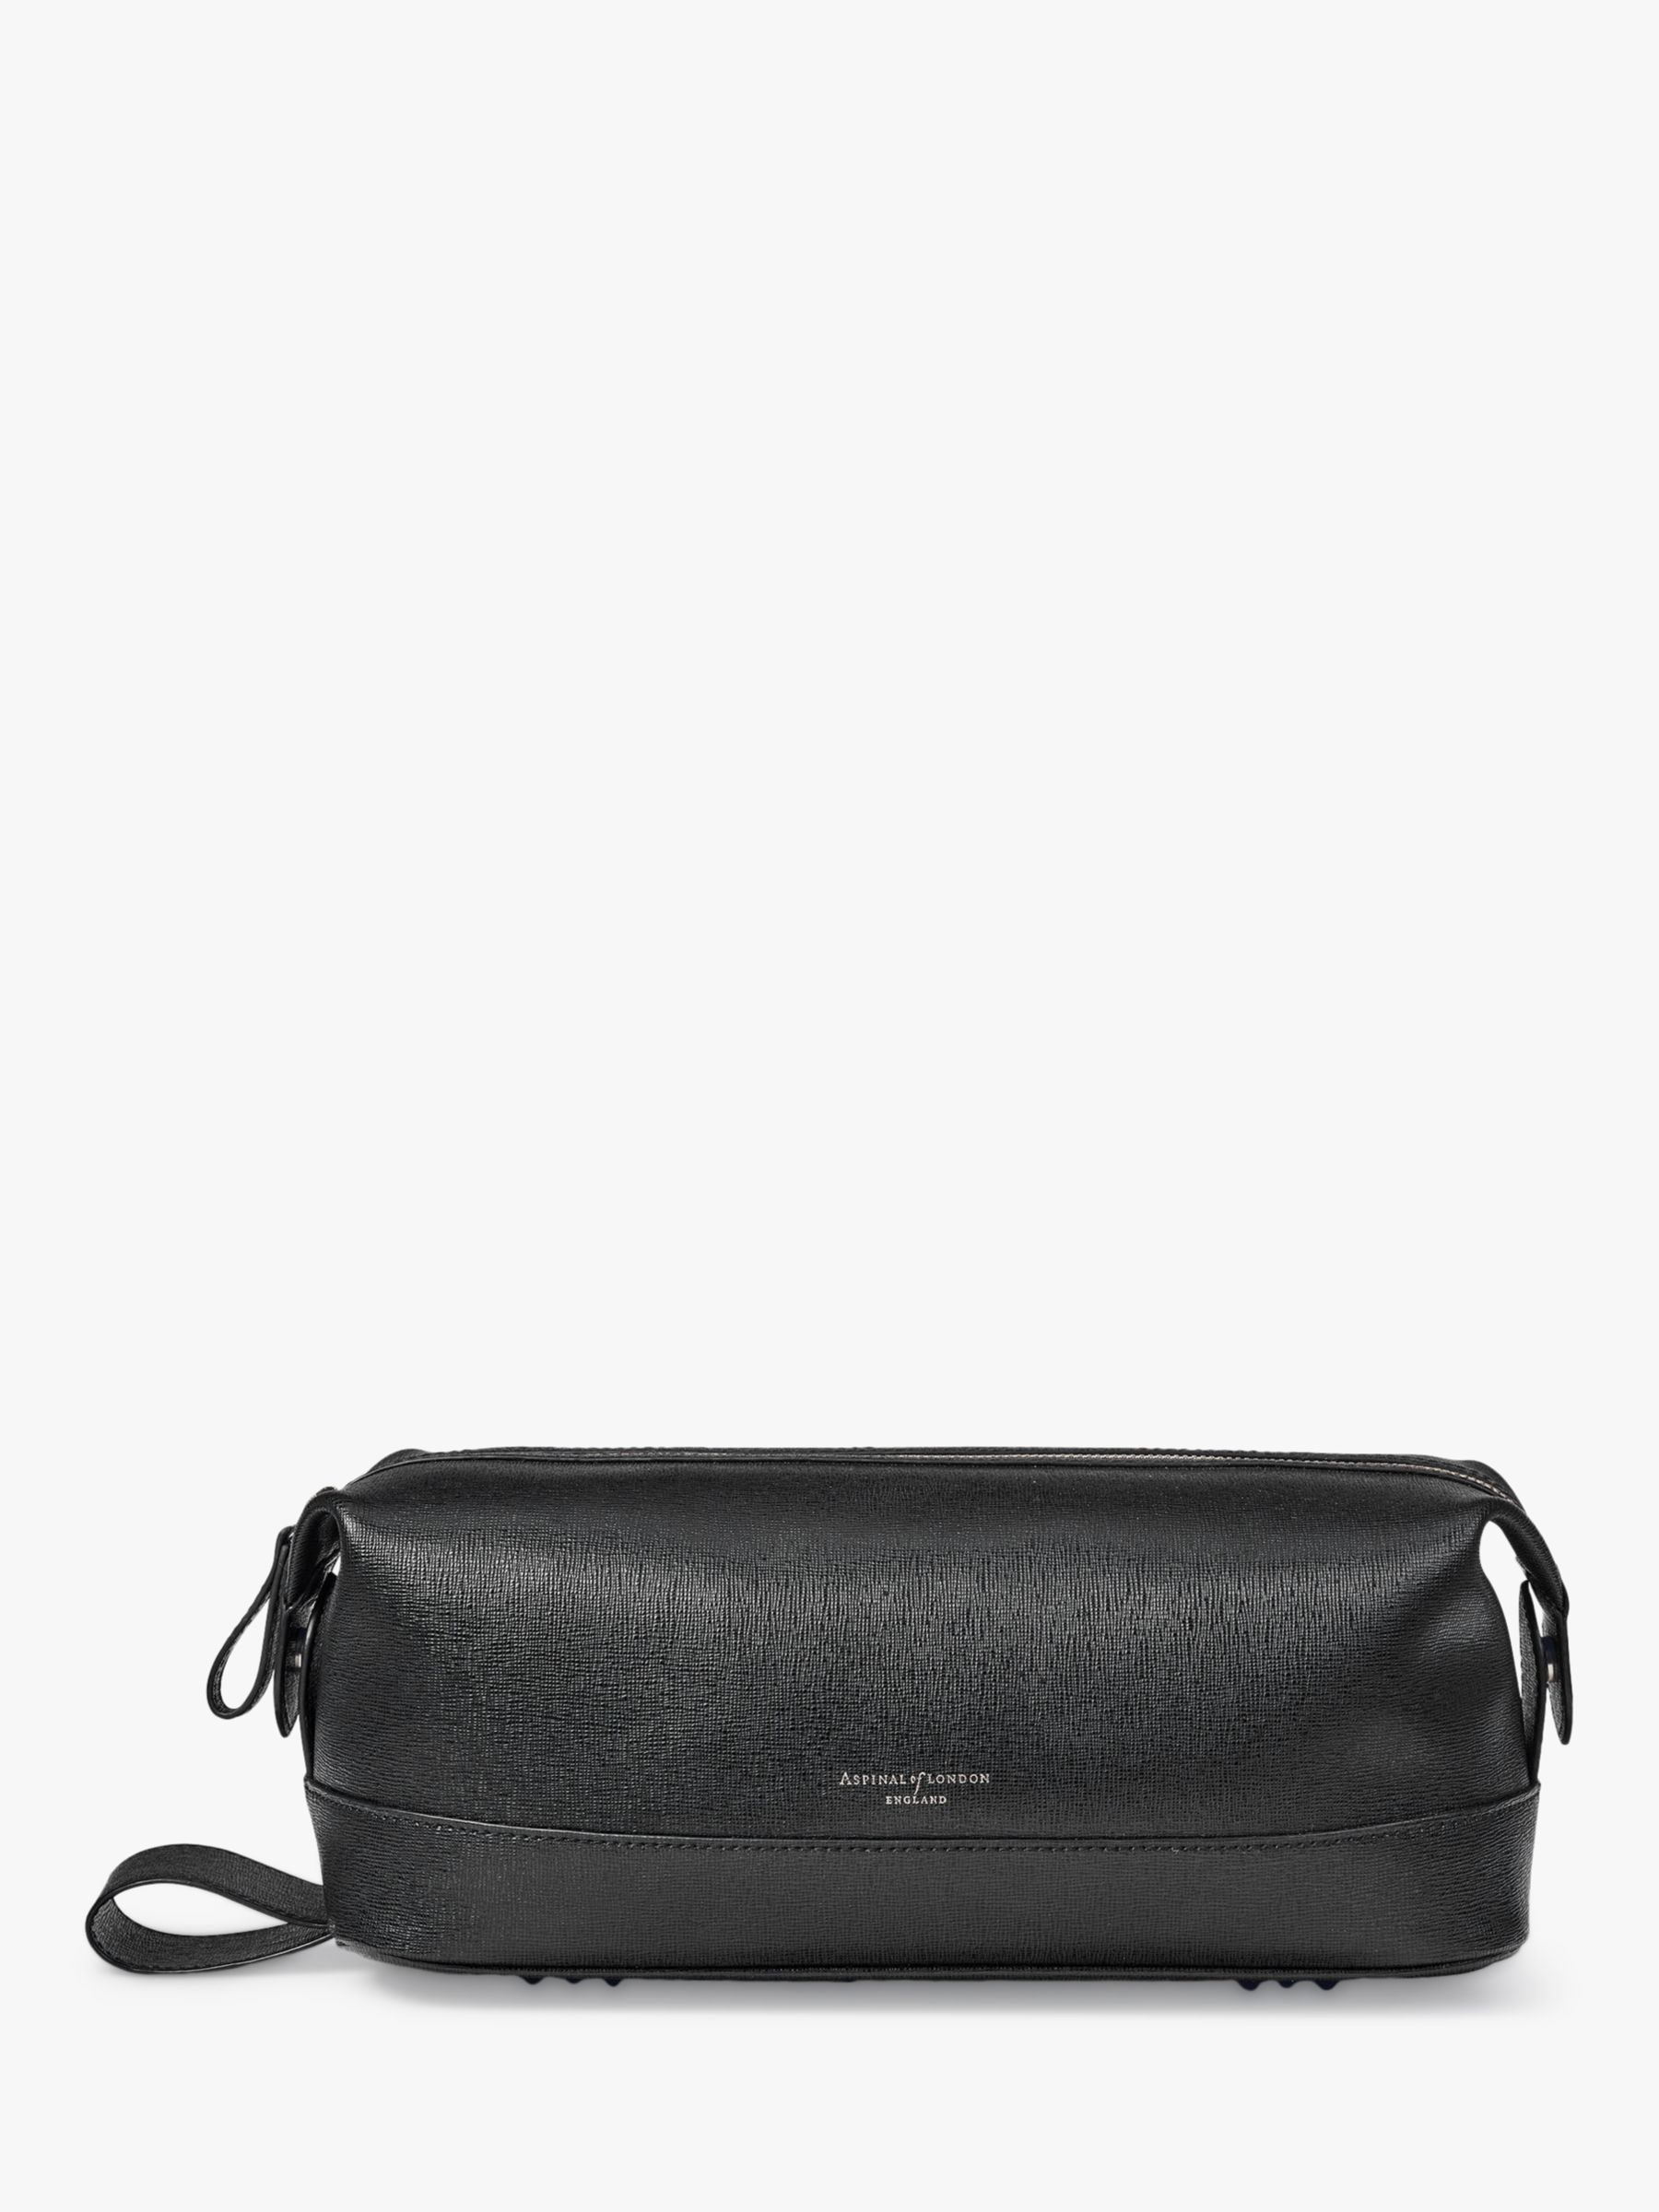 Aspinal of London Saffiano Leather Wash Bag, Black 1